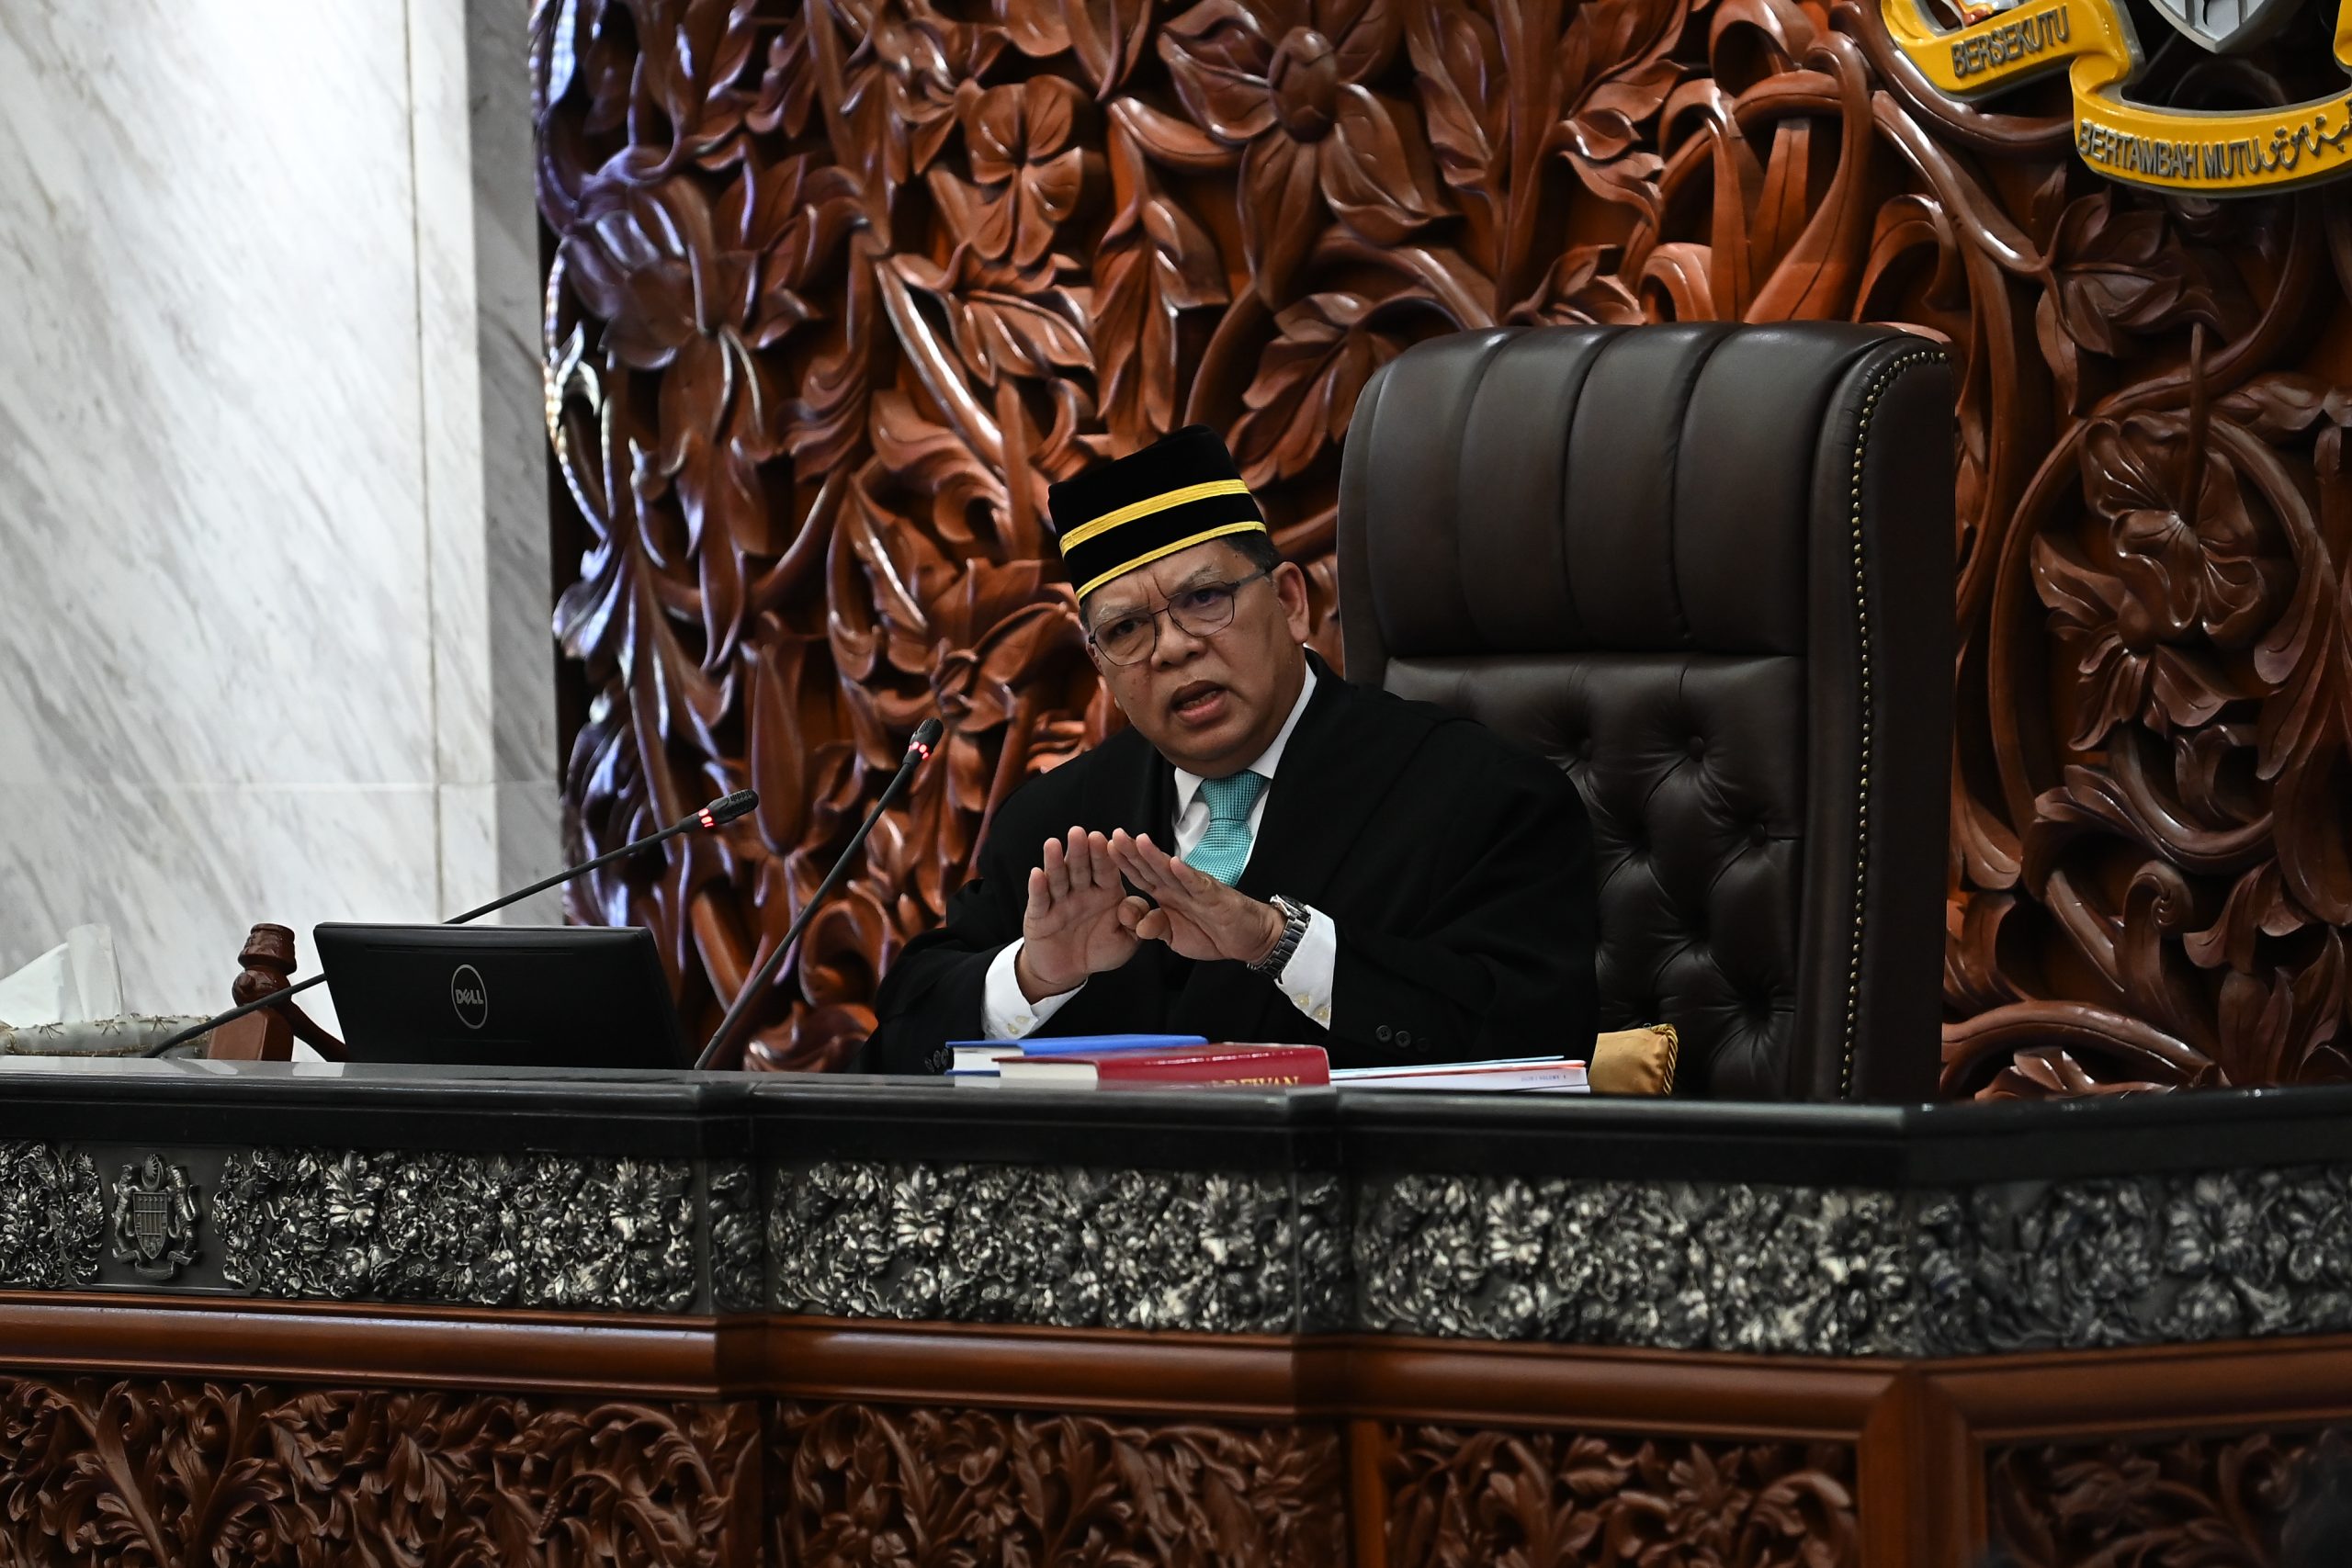 Dewan Speaker bans usage of ‘zionist’, ‘yahudi’ and ‘kafir’ during debates